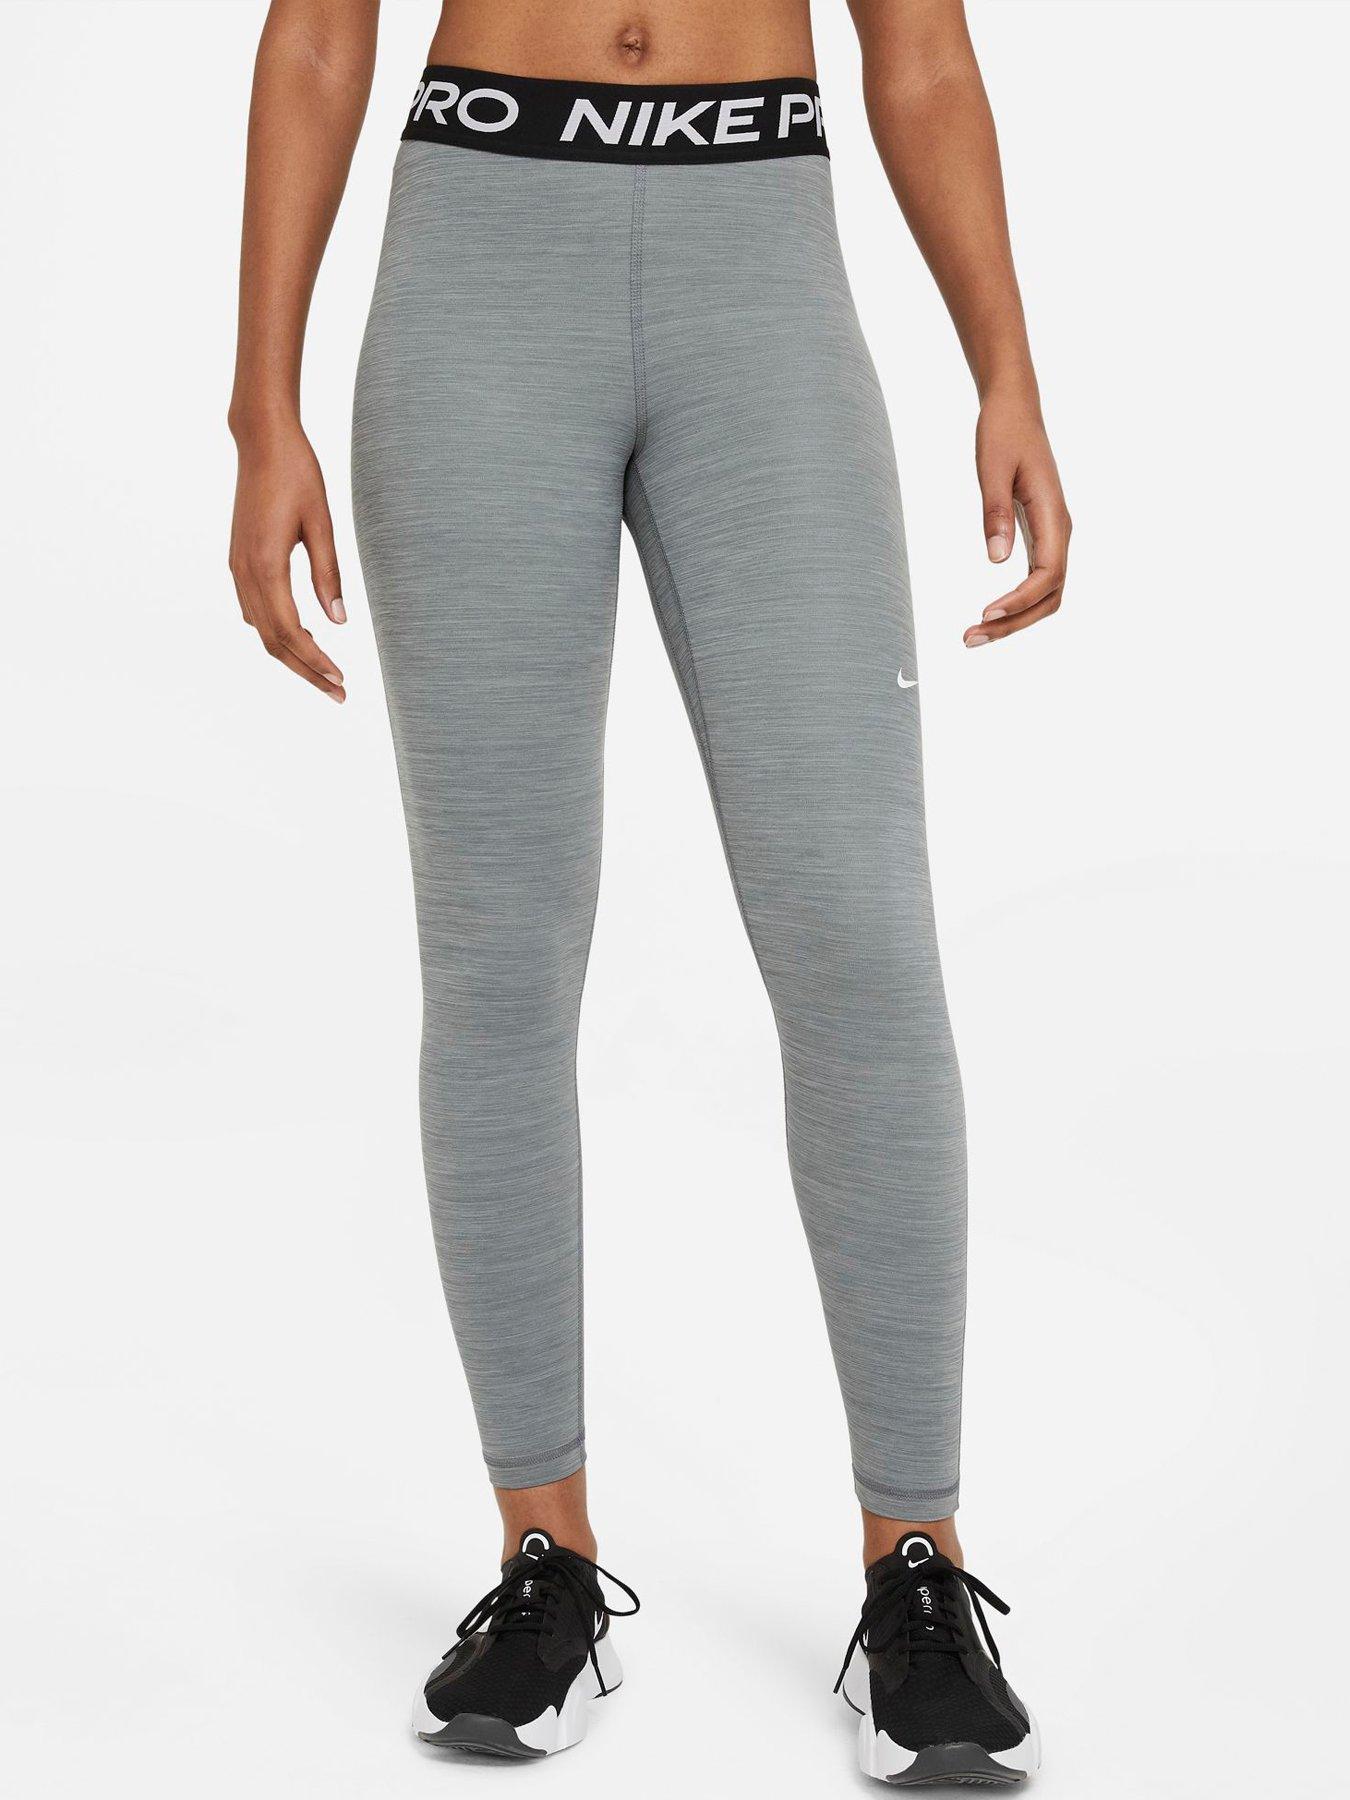 Buy Women's Sexy Tights High Waist Underwear Patchwork Gym Sport Yoga  Leggings(S,Dark Gray) at